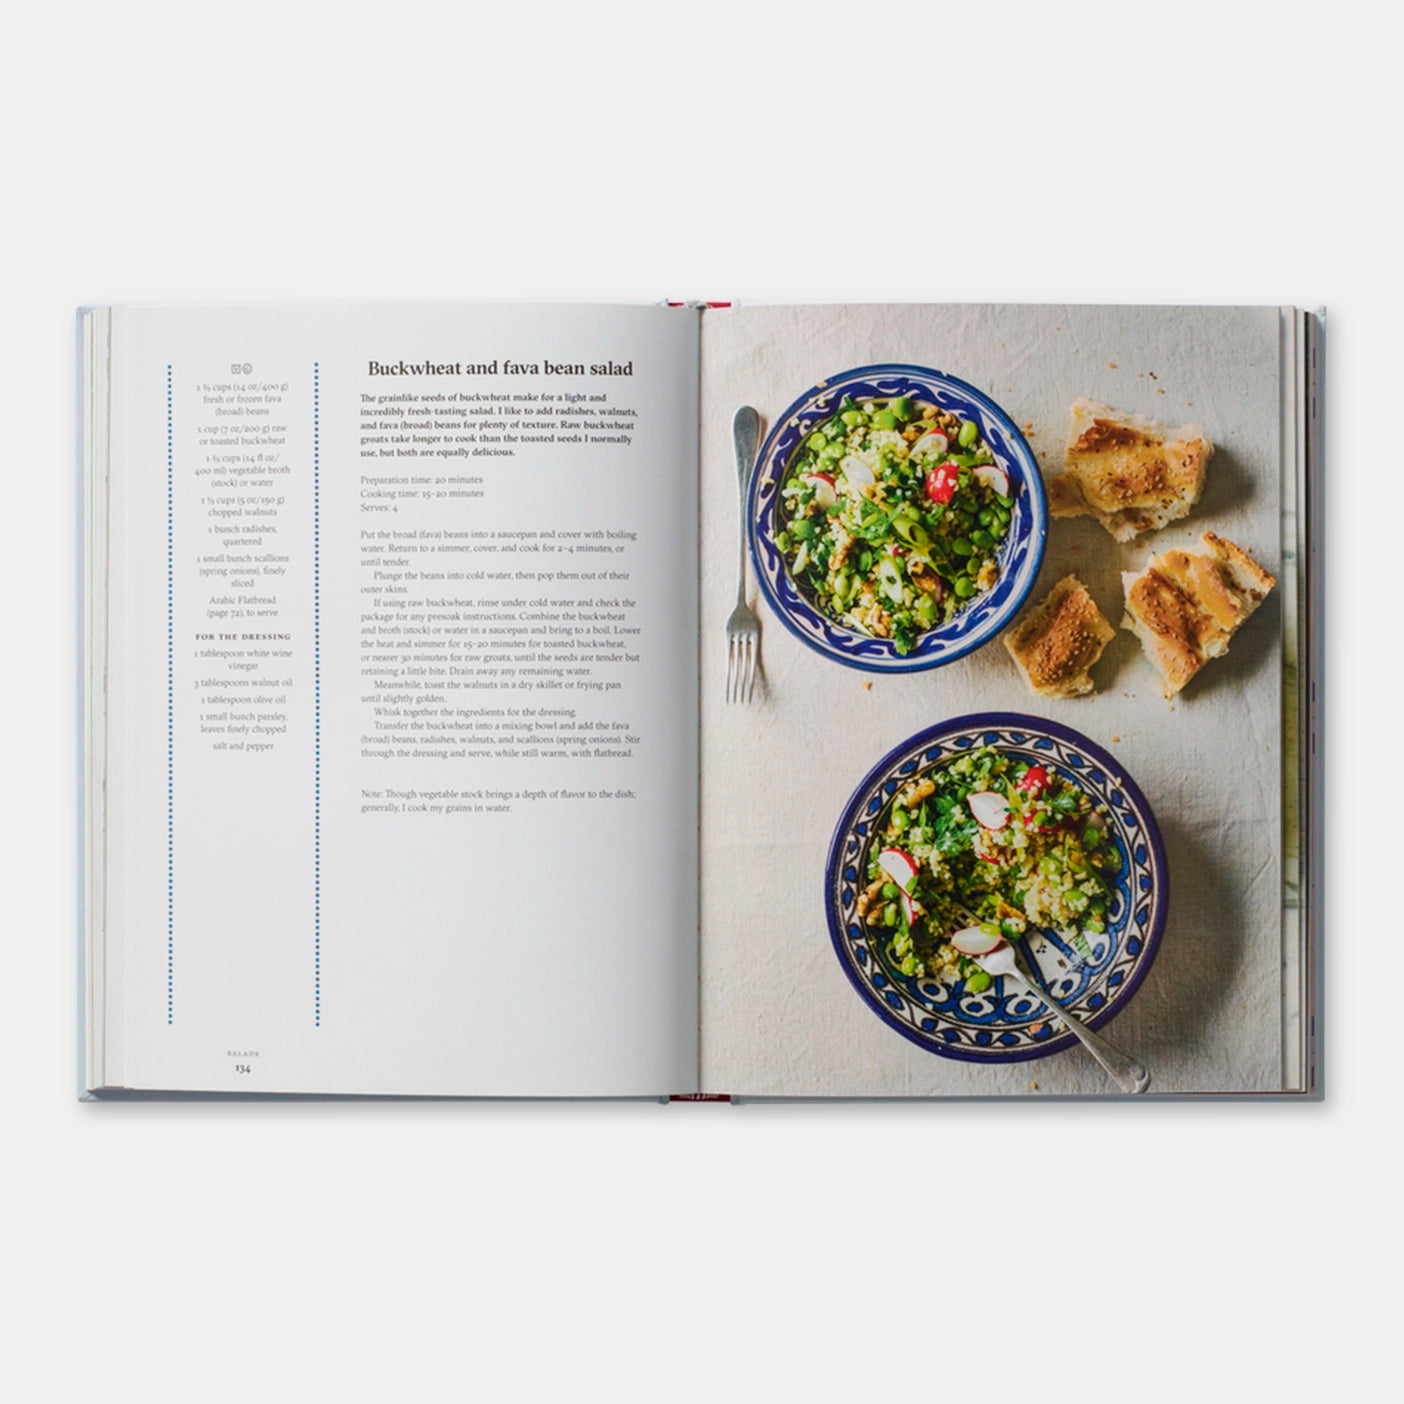 The Middle Eastern Vegetarian Cookbook
Salma Hage